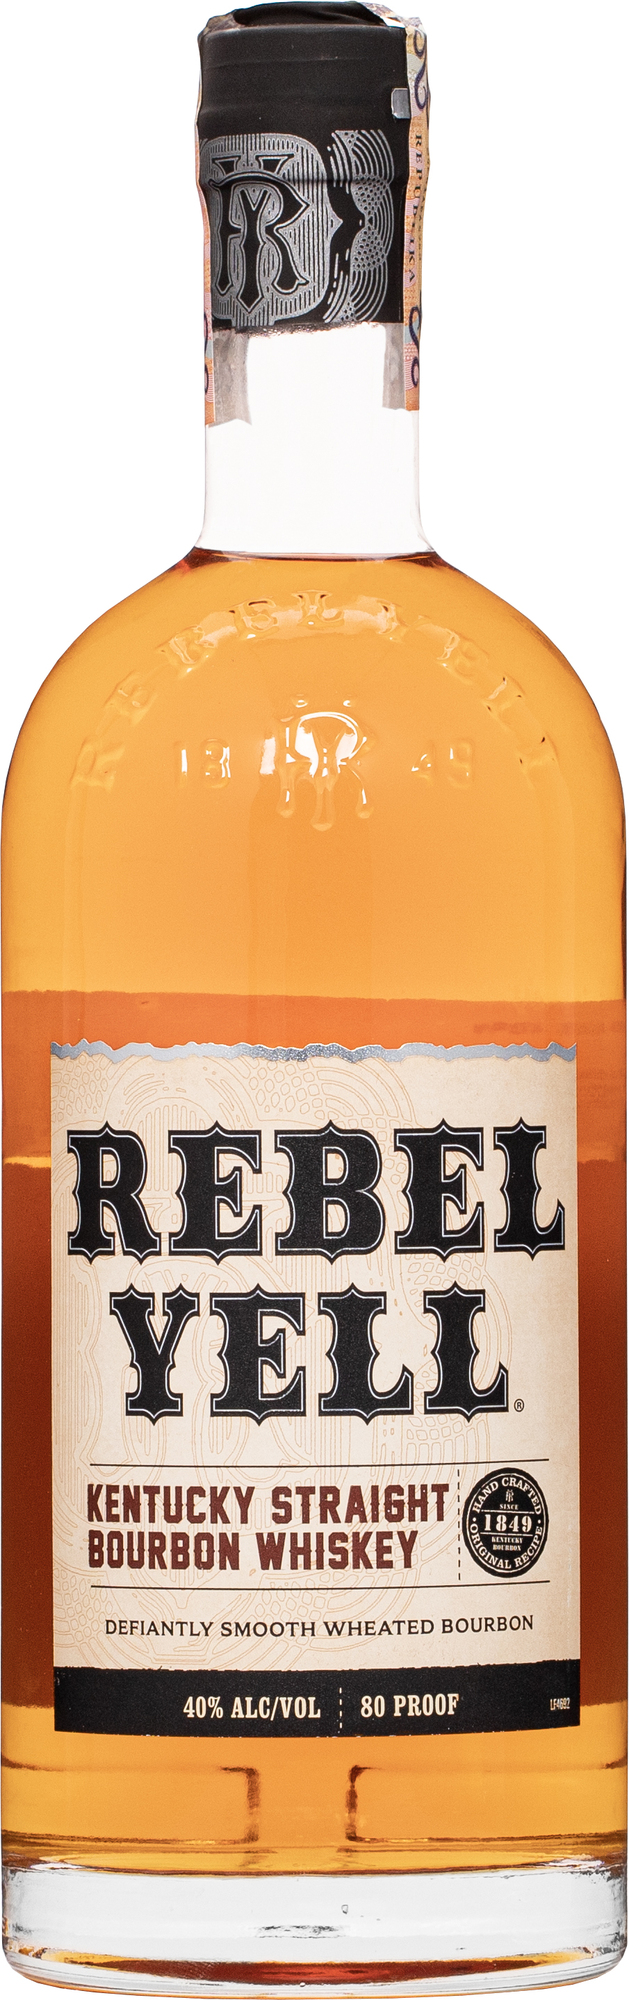 Rebel Kentucky Straight Bourbon, 40%, 1l